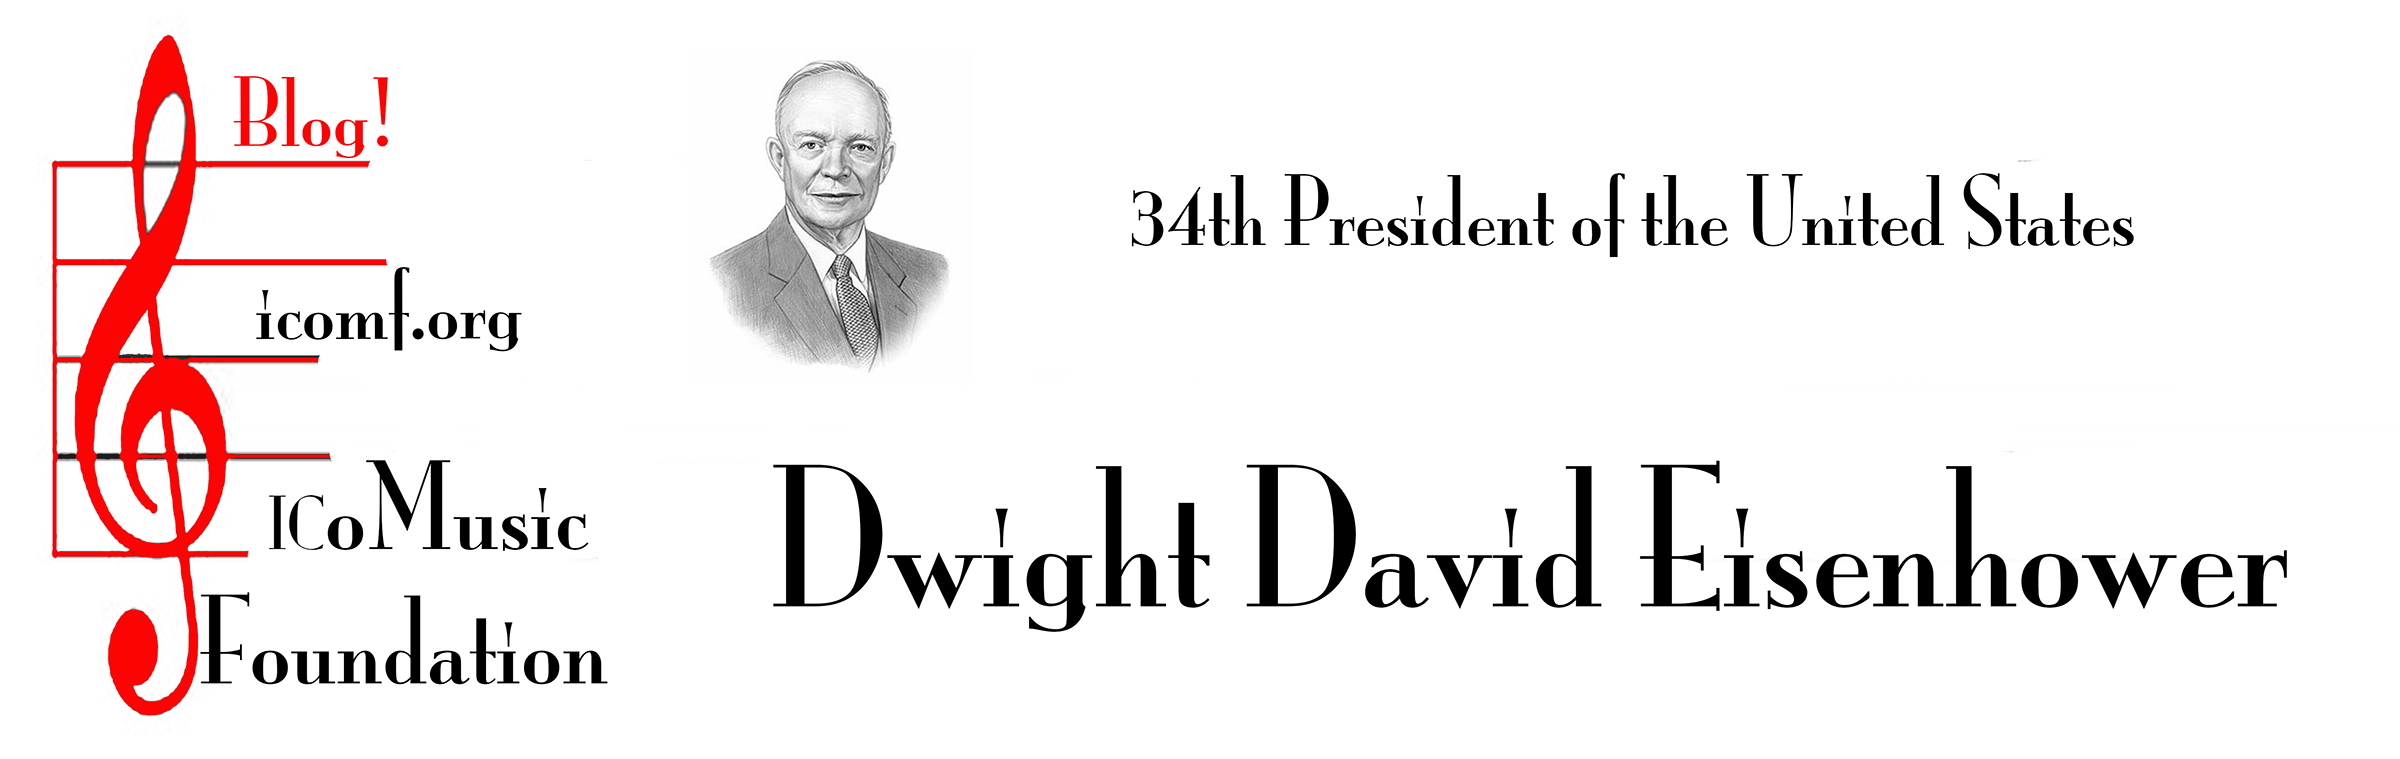 34th President Dwight David Eisenhower Banner